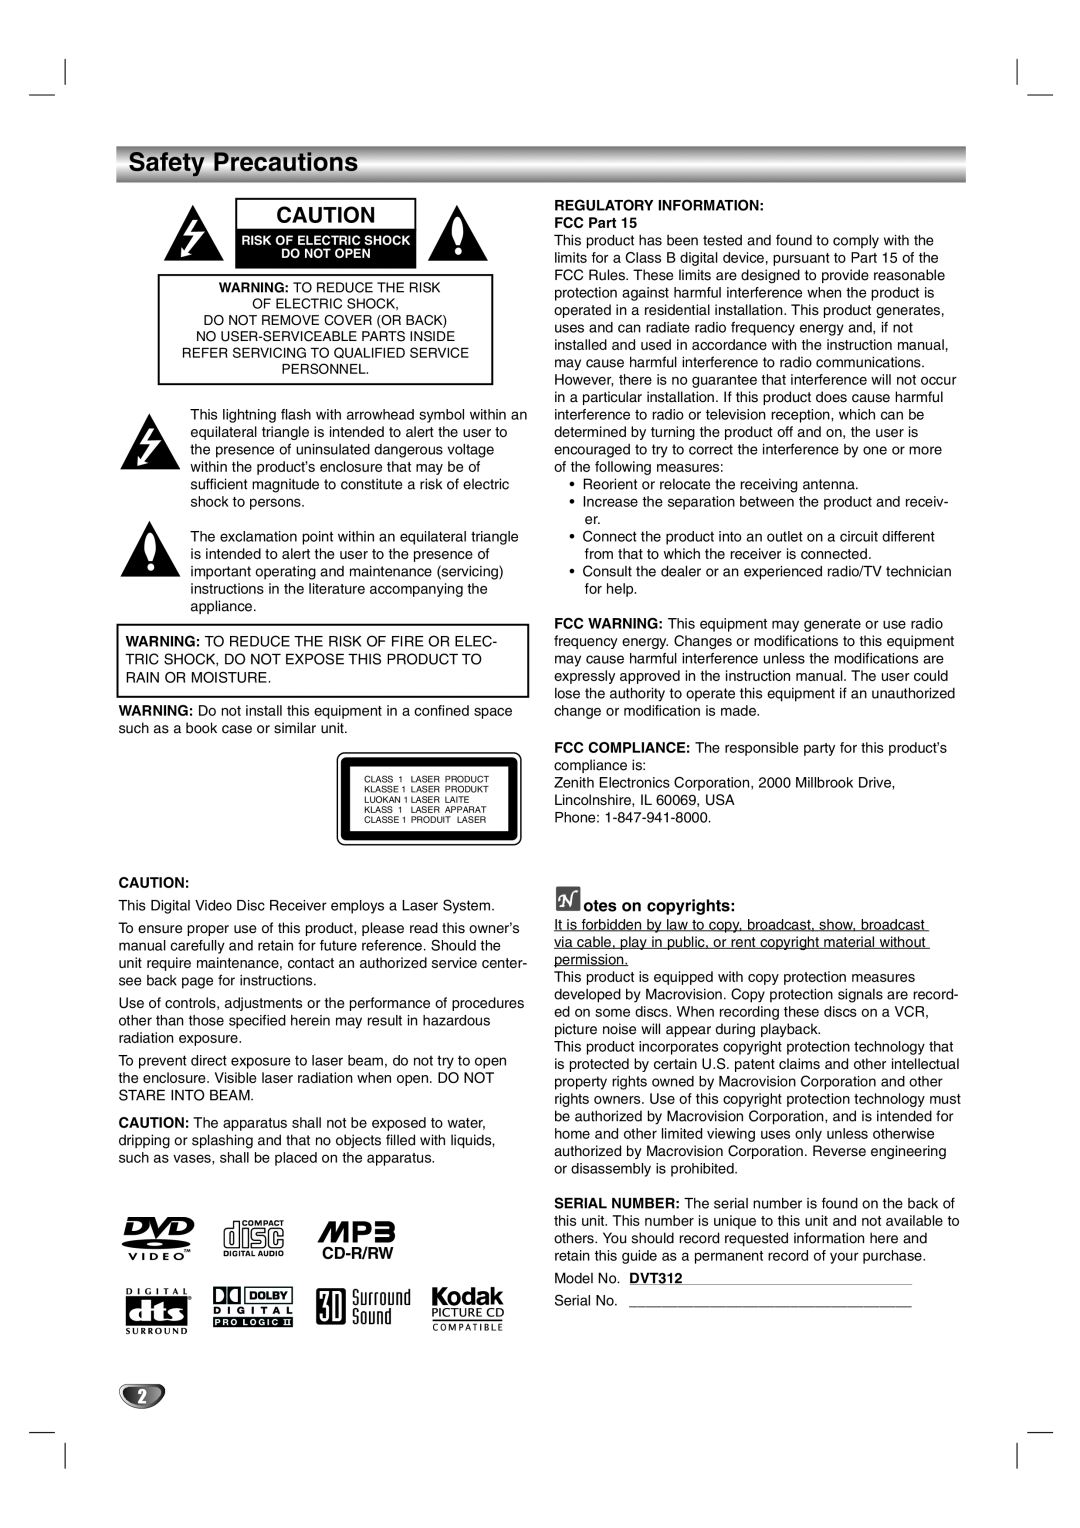 Zenith DVT312 warranty Safety Precautions, Cd-R/Rw, otes on copyrights, REGULATORY INFORMATION FCC Part 